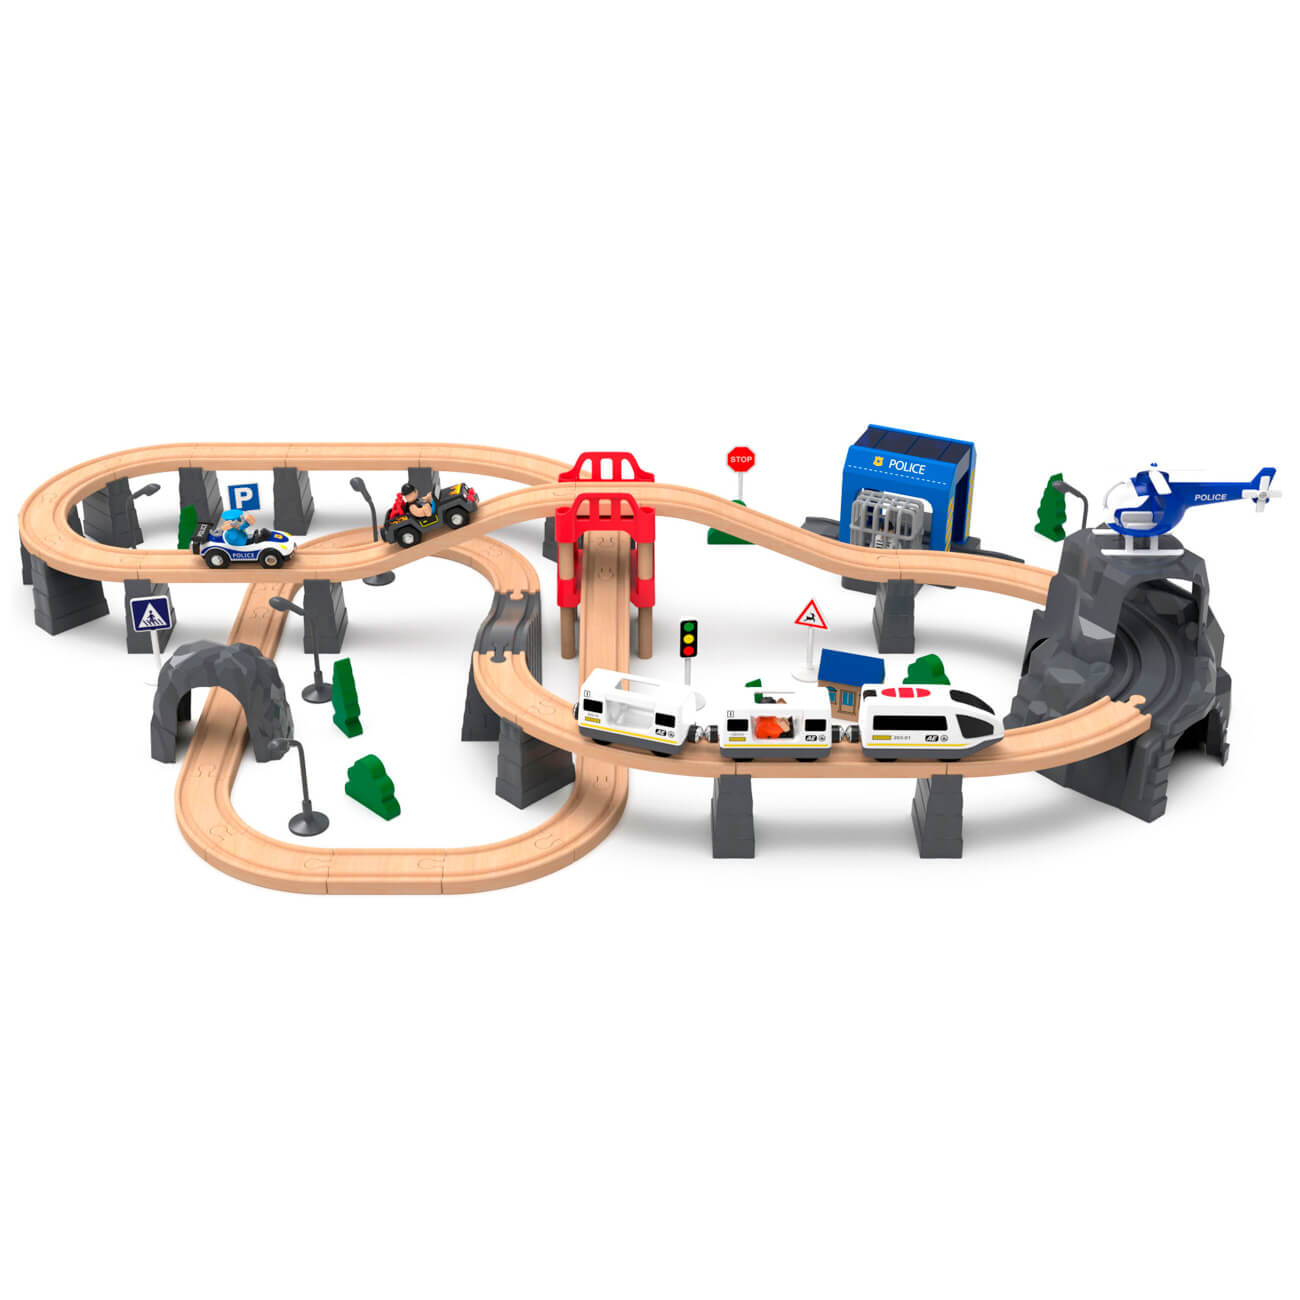 Железная дорога игрушечная, 98 см, дерево/пластик, Электропоезд, Game rail клаксон dream bike пластик синий